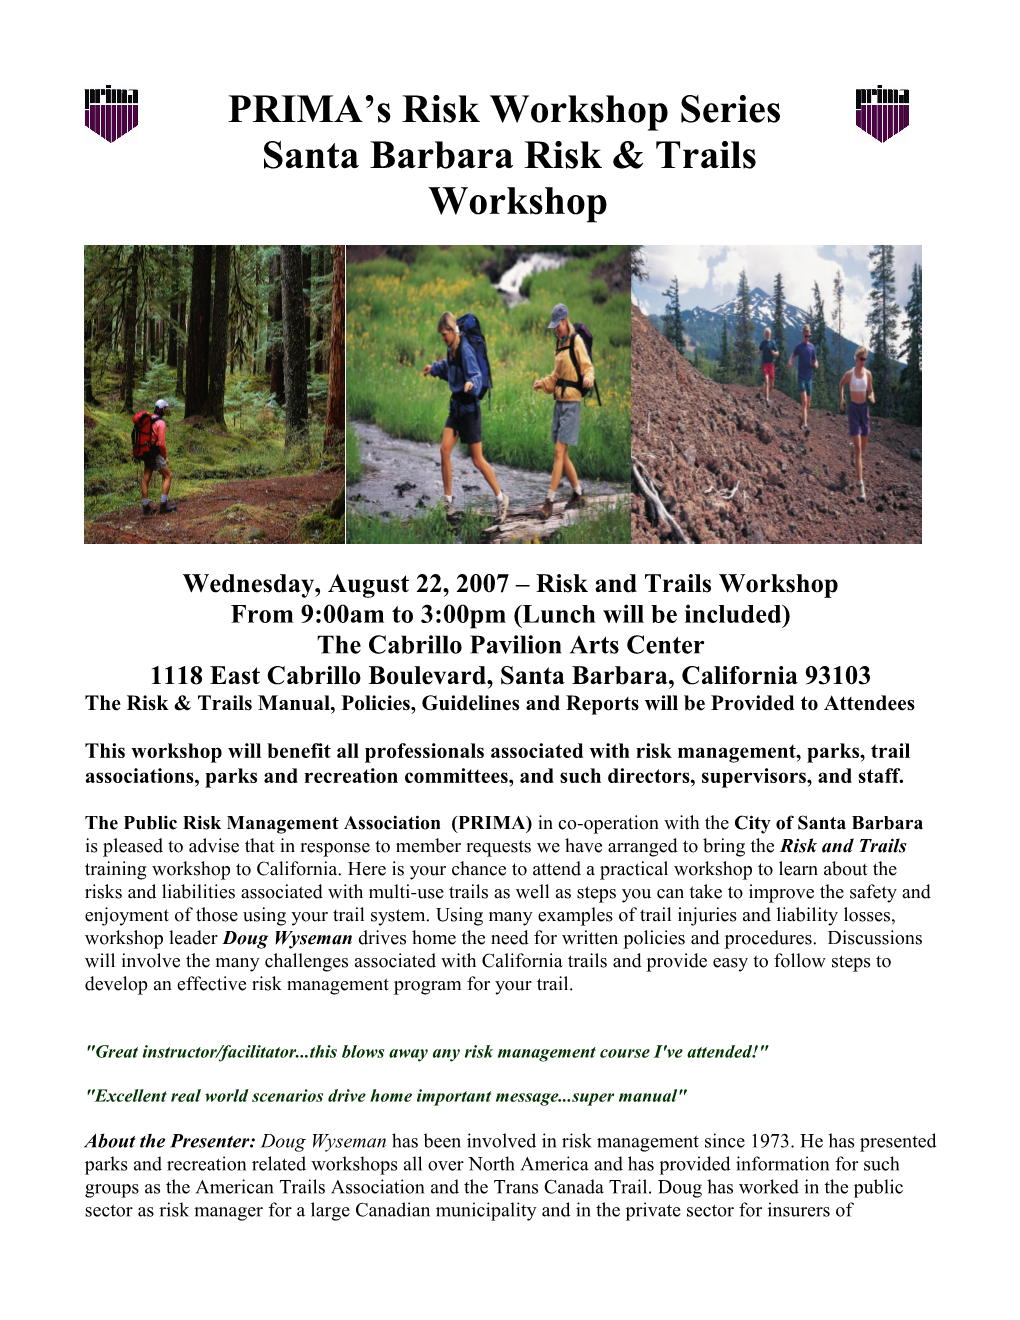 PRIMA S Risk and Trails Workshop